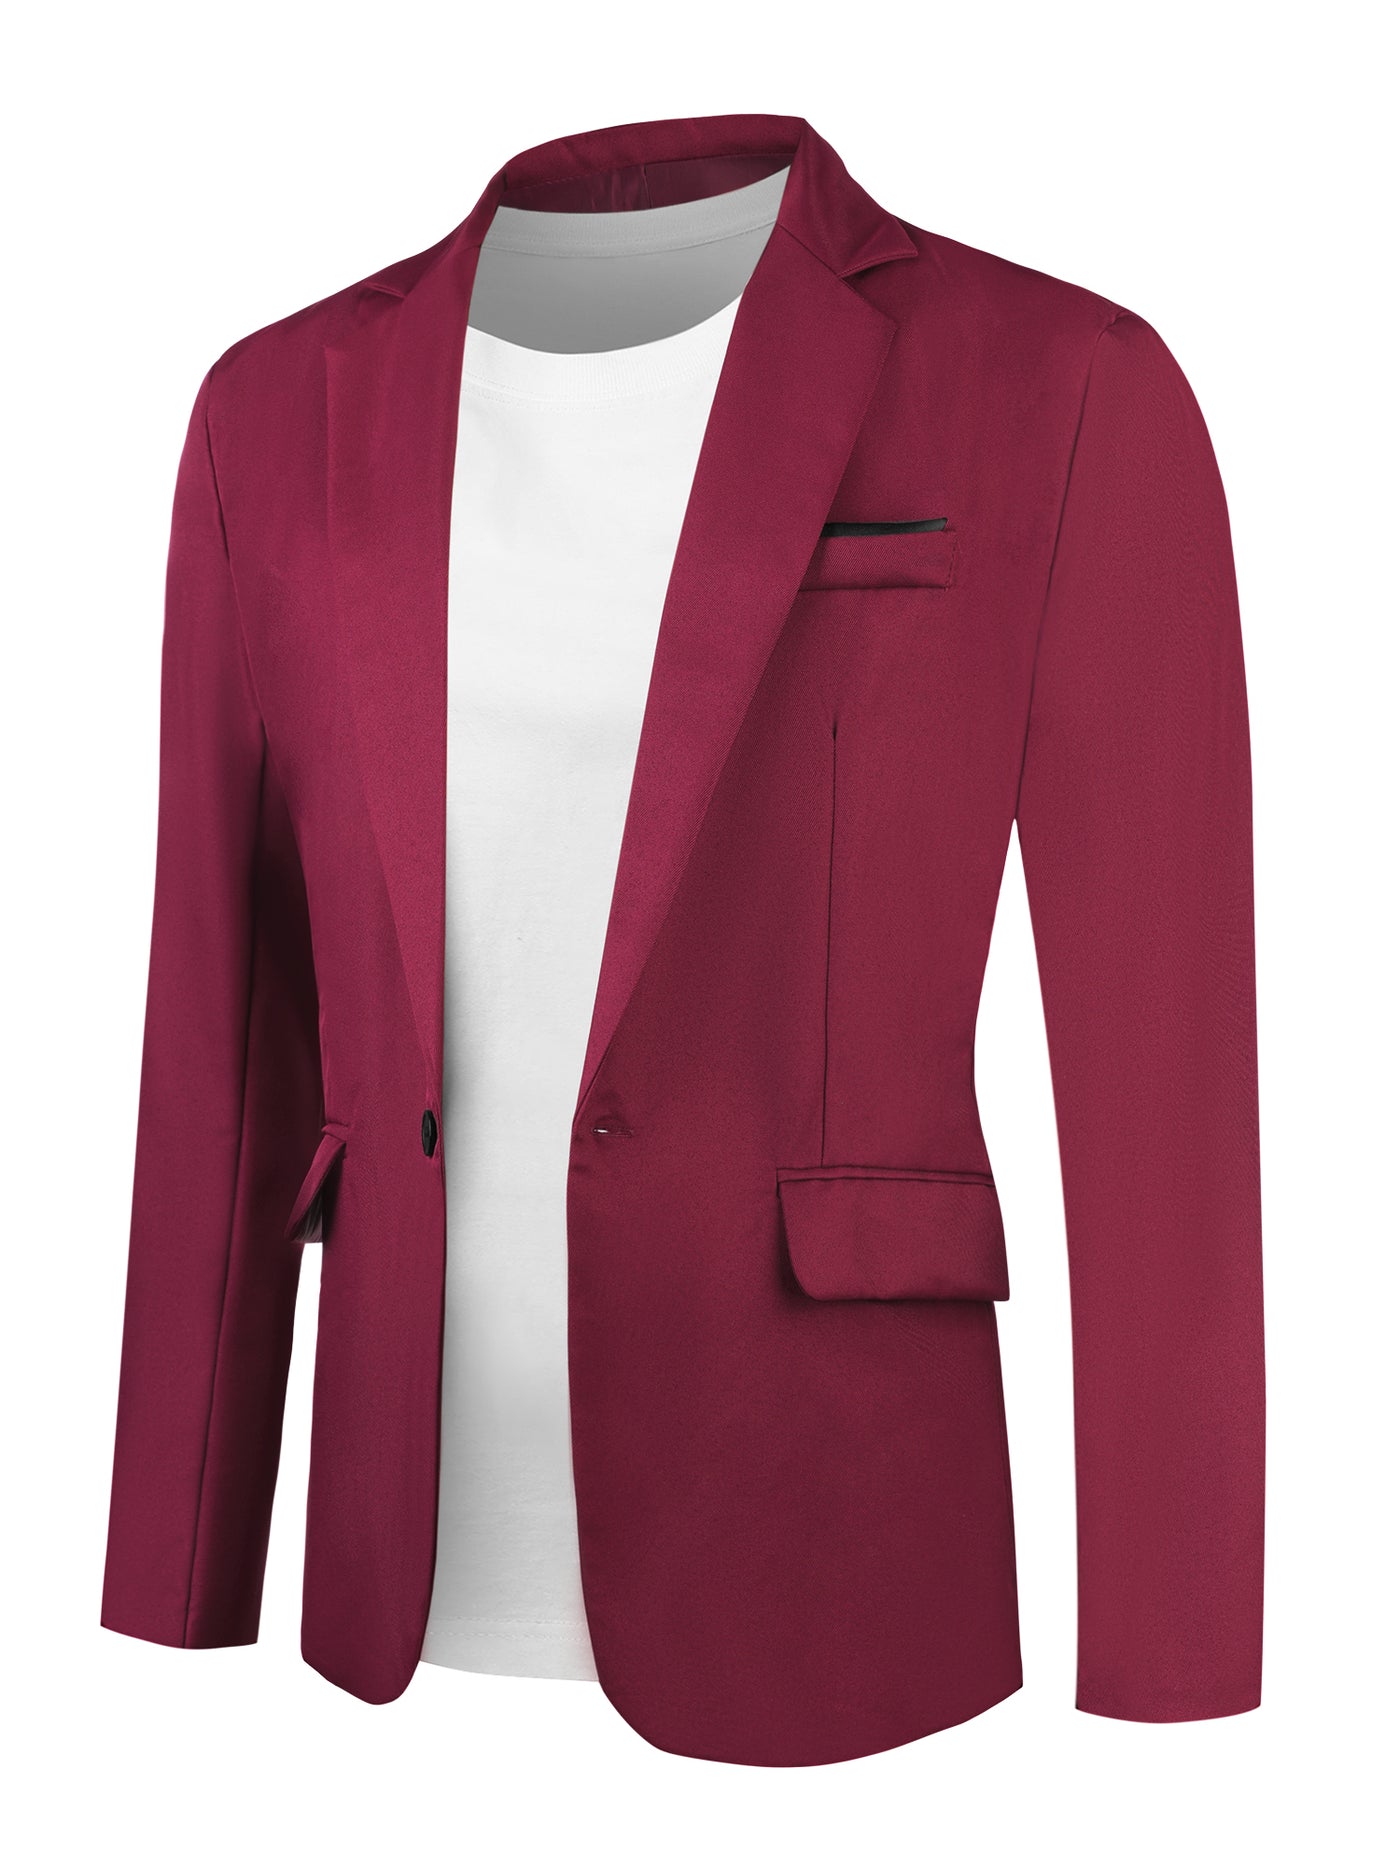 Bublédon Business Solid Blazer for Men's Notched Lapel Button Down Sports Coats